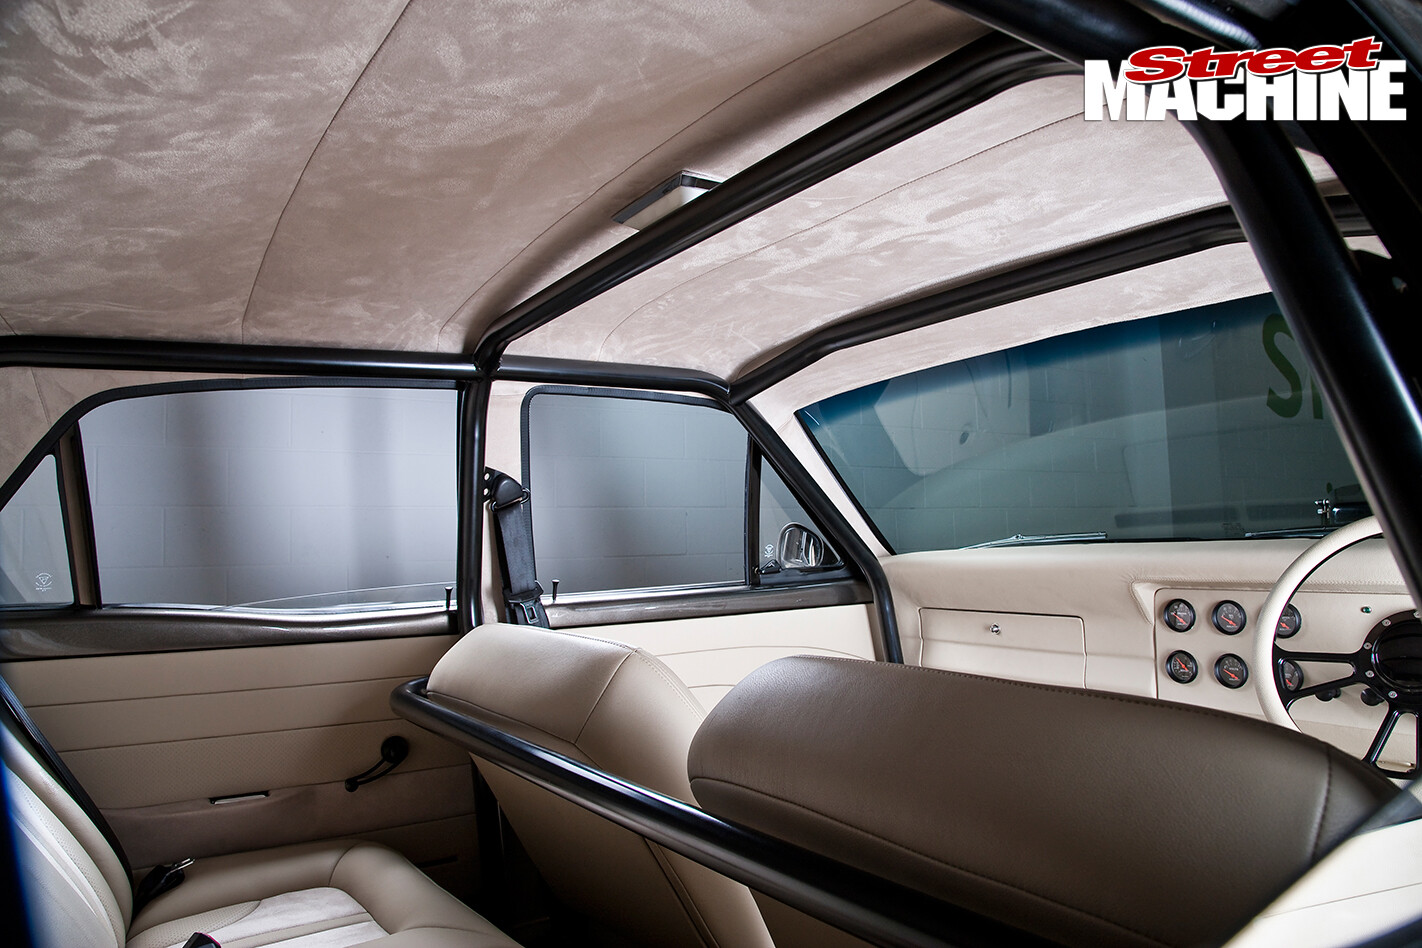 Ford -XY-Falcon -interior -roof